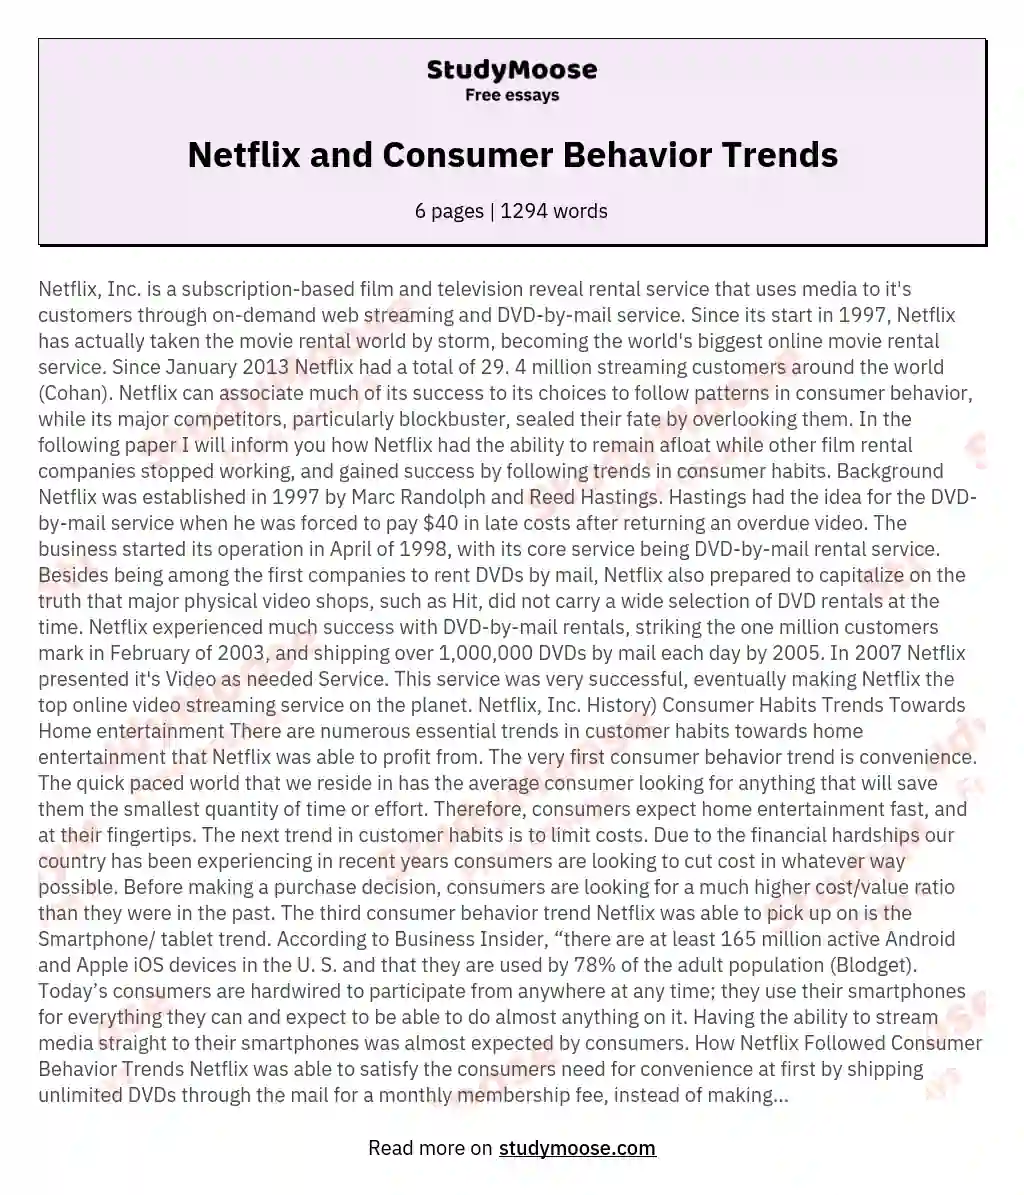 Netflix and Consumer Behavior Trends essay